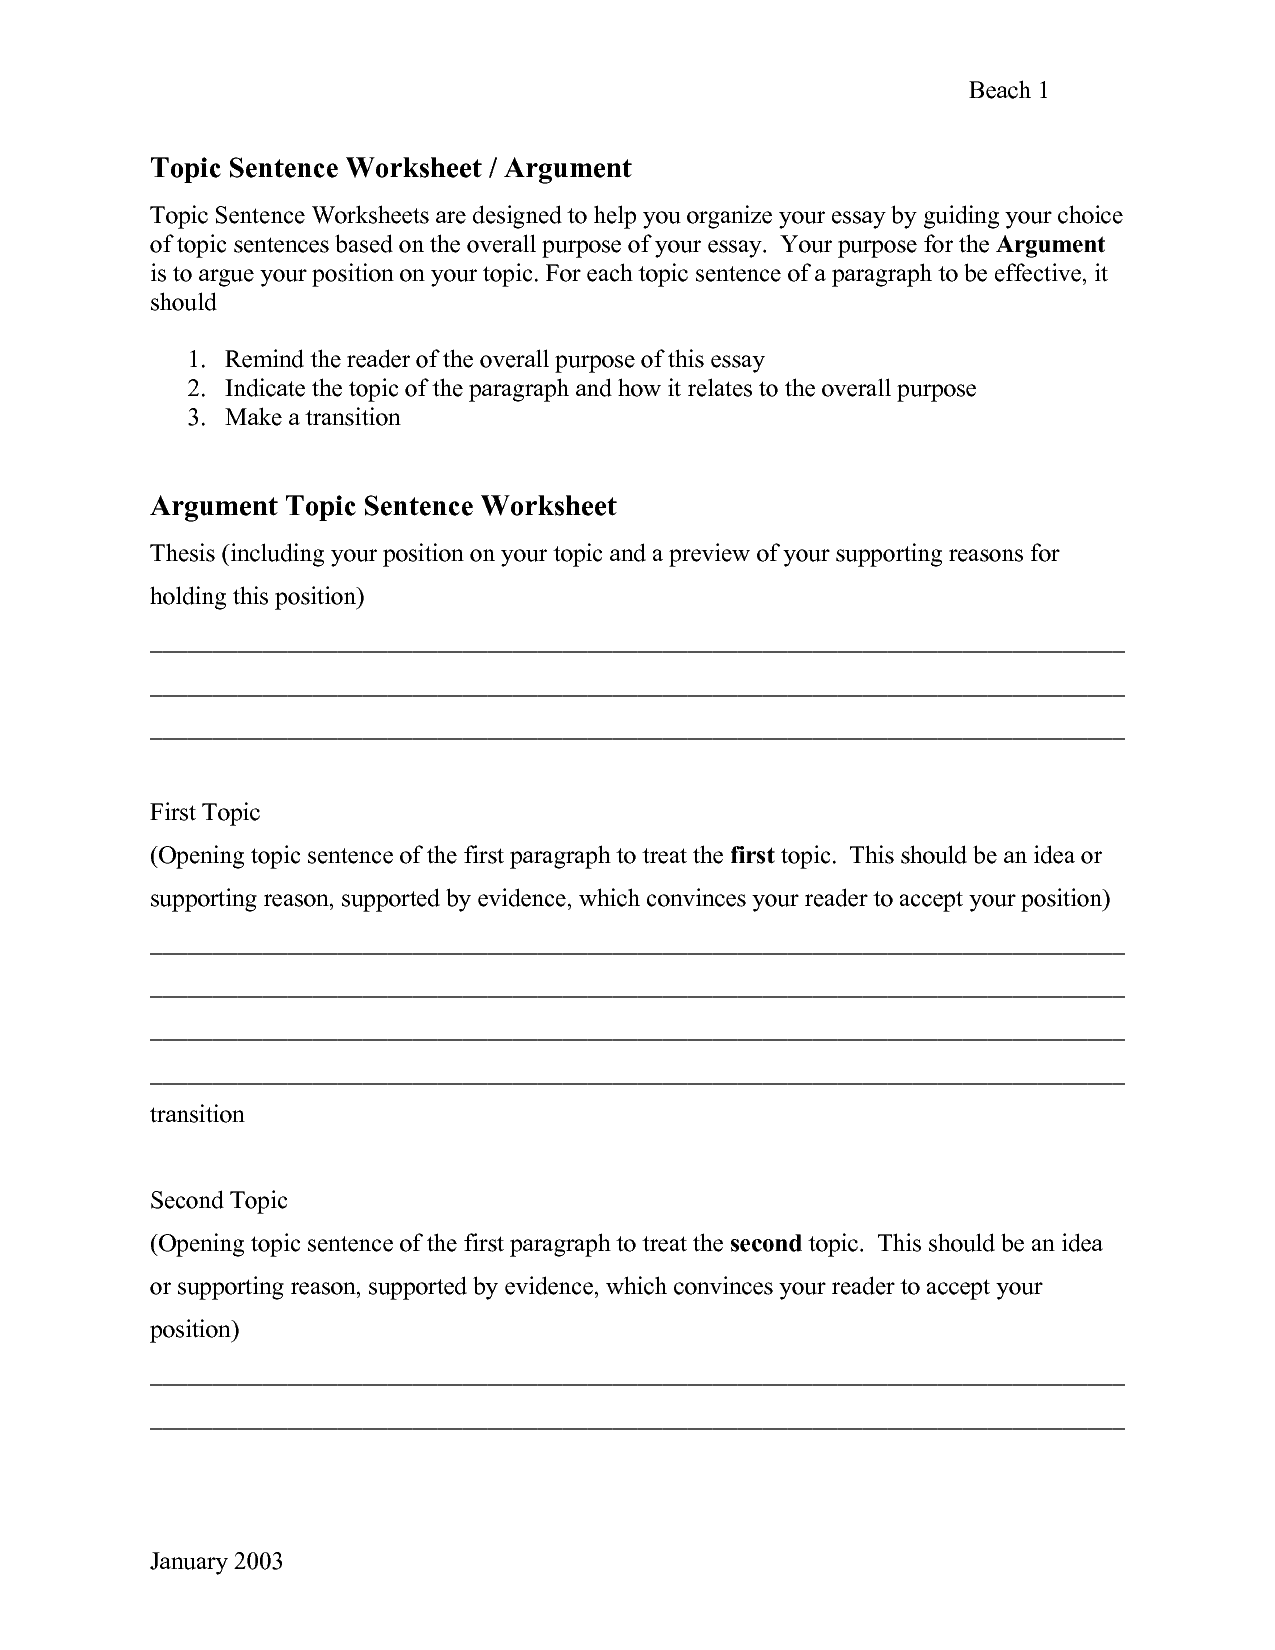 Topic Sentence Practice Worksheet Pdf